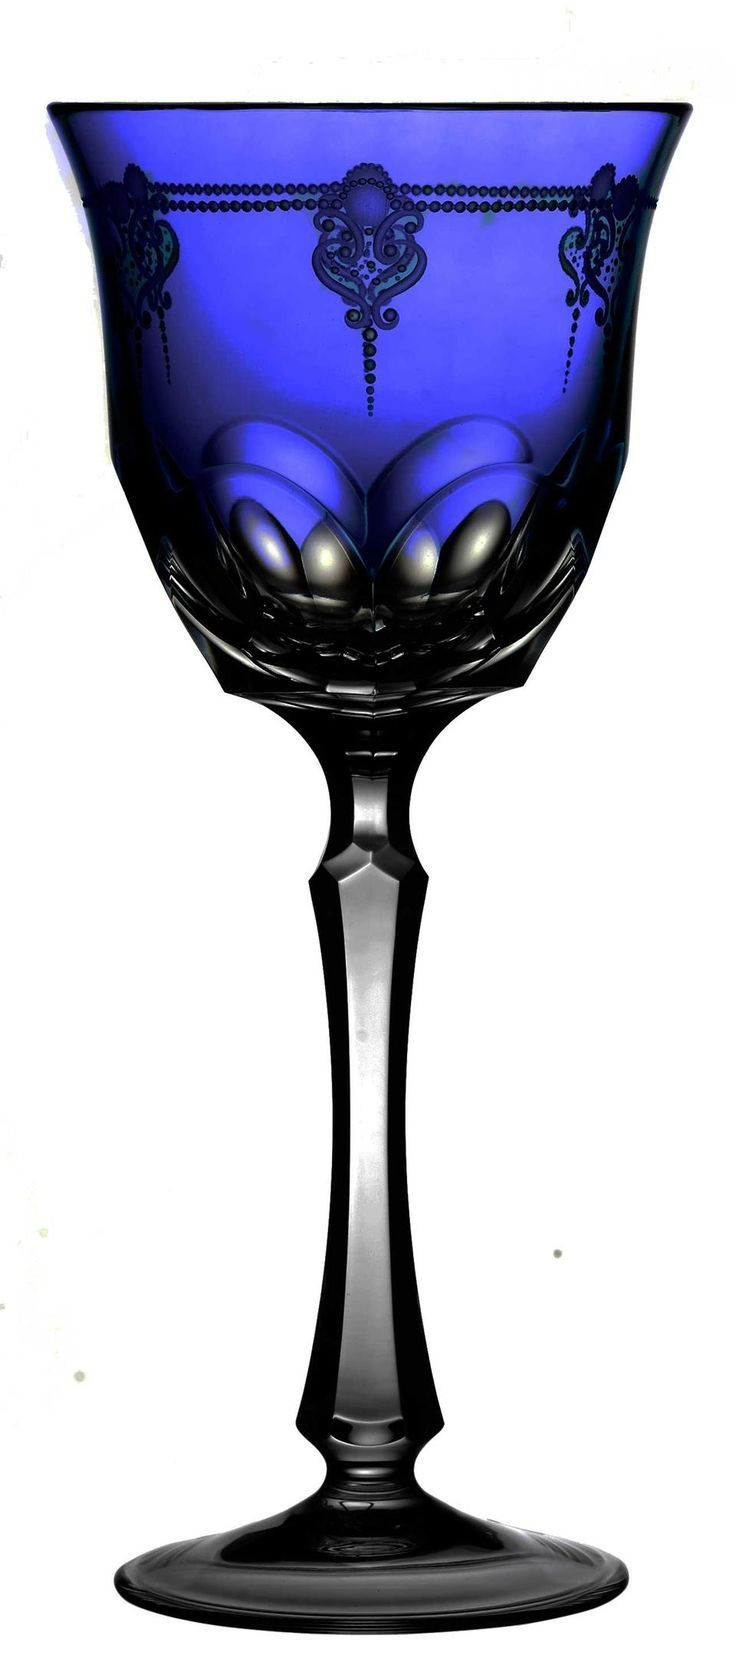 waterford lismore thistle vase of 16 best glassesa¥ images on pinterest dish sets glass art and intended for cocoscollections elegance cobalt wine glass by varga